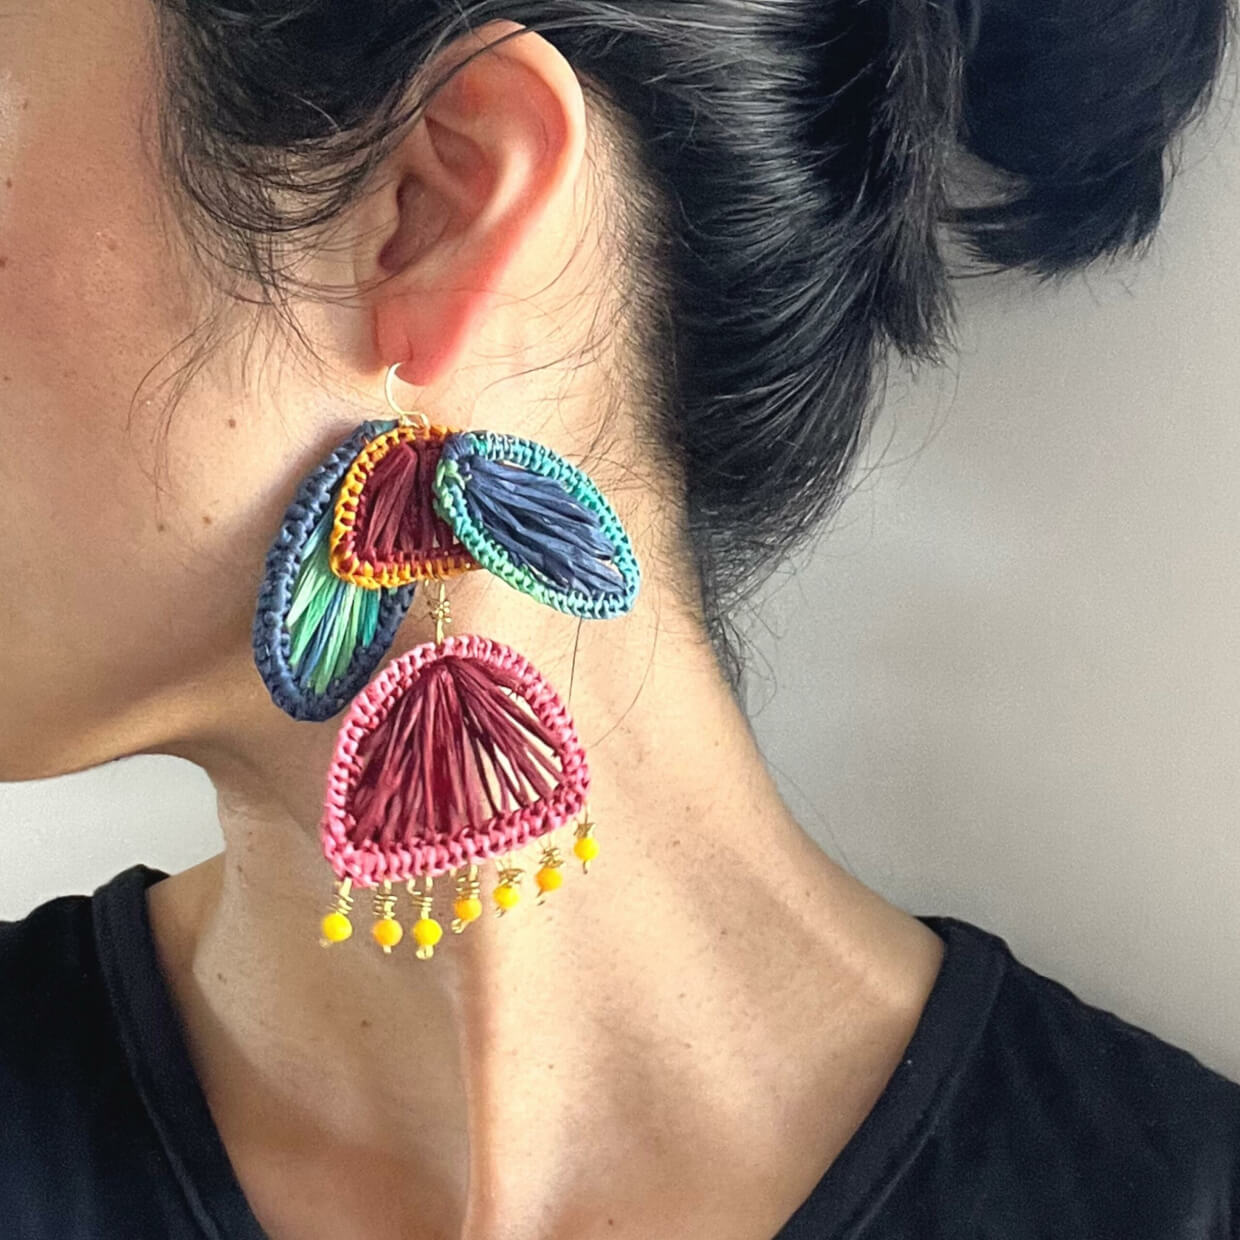 The Pohutukawa Flower Raffia Earrings